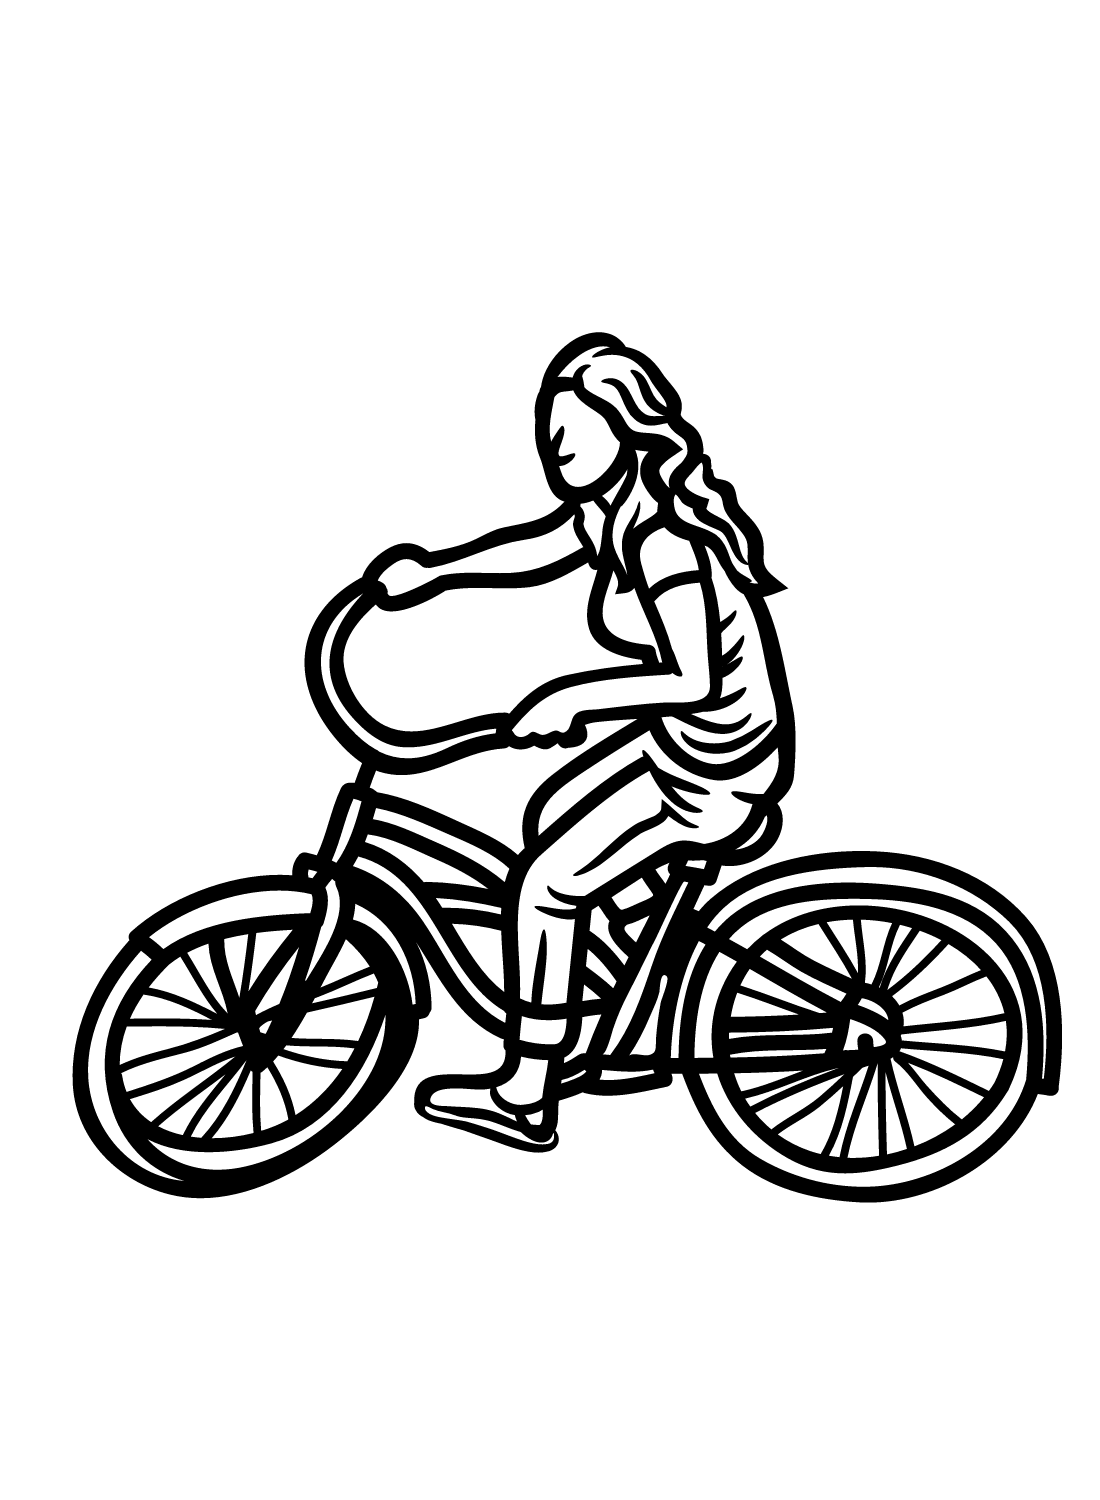 Menina com bicicleta from Bicicleta